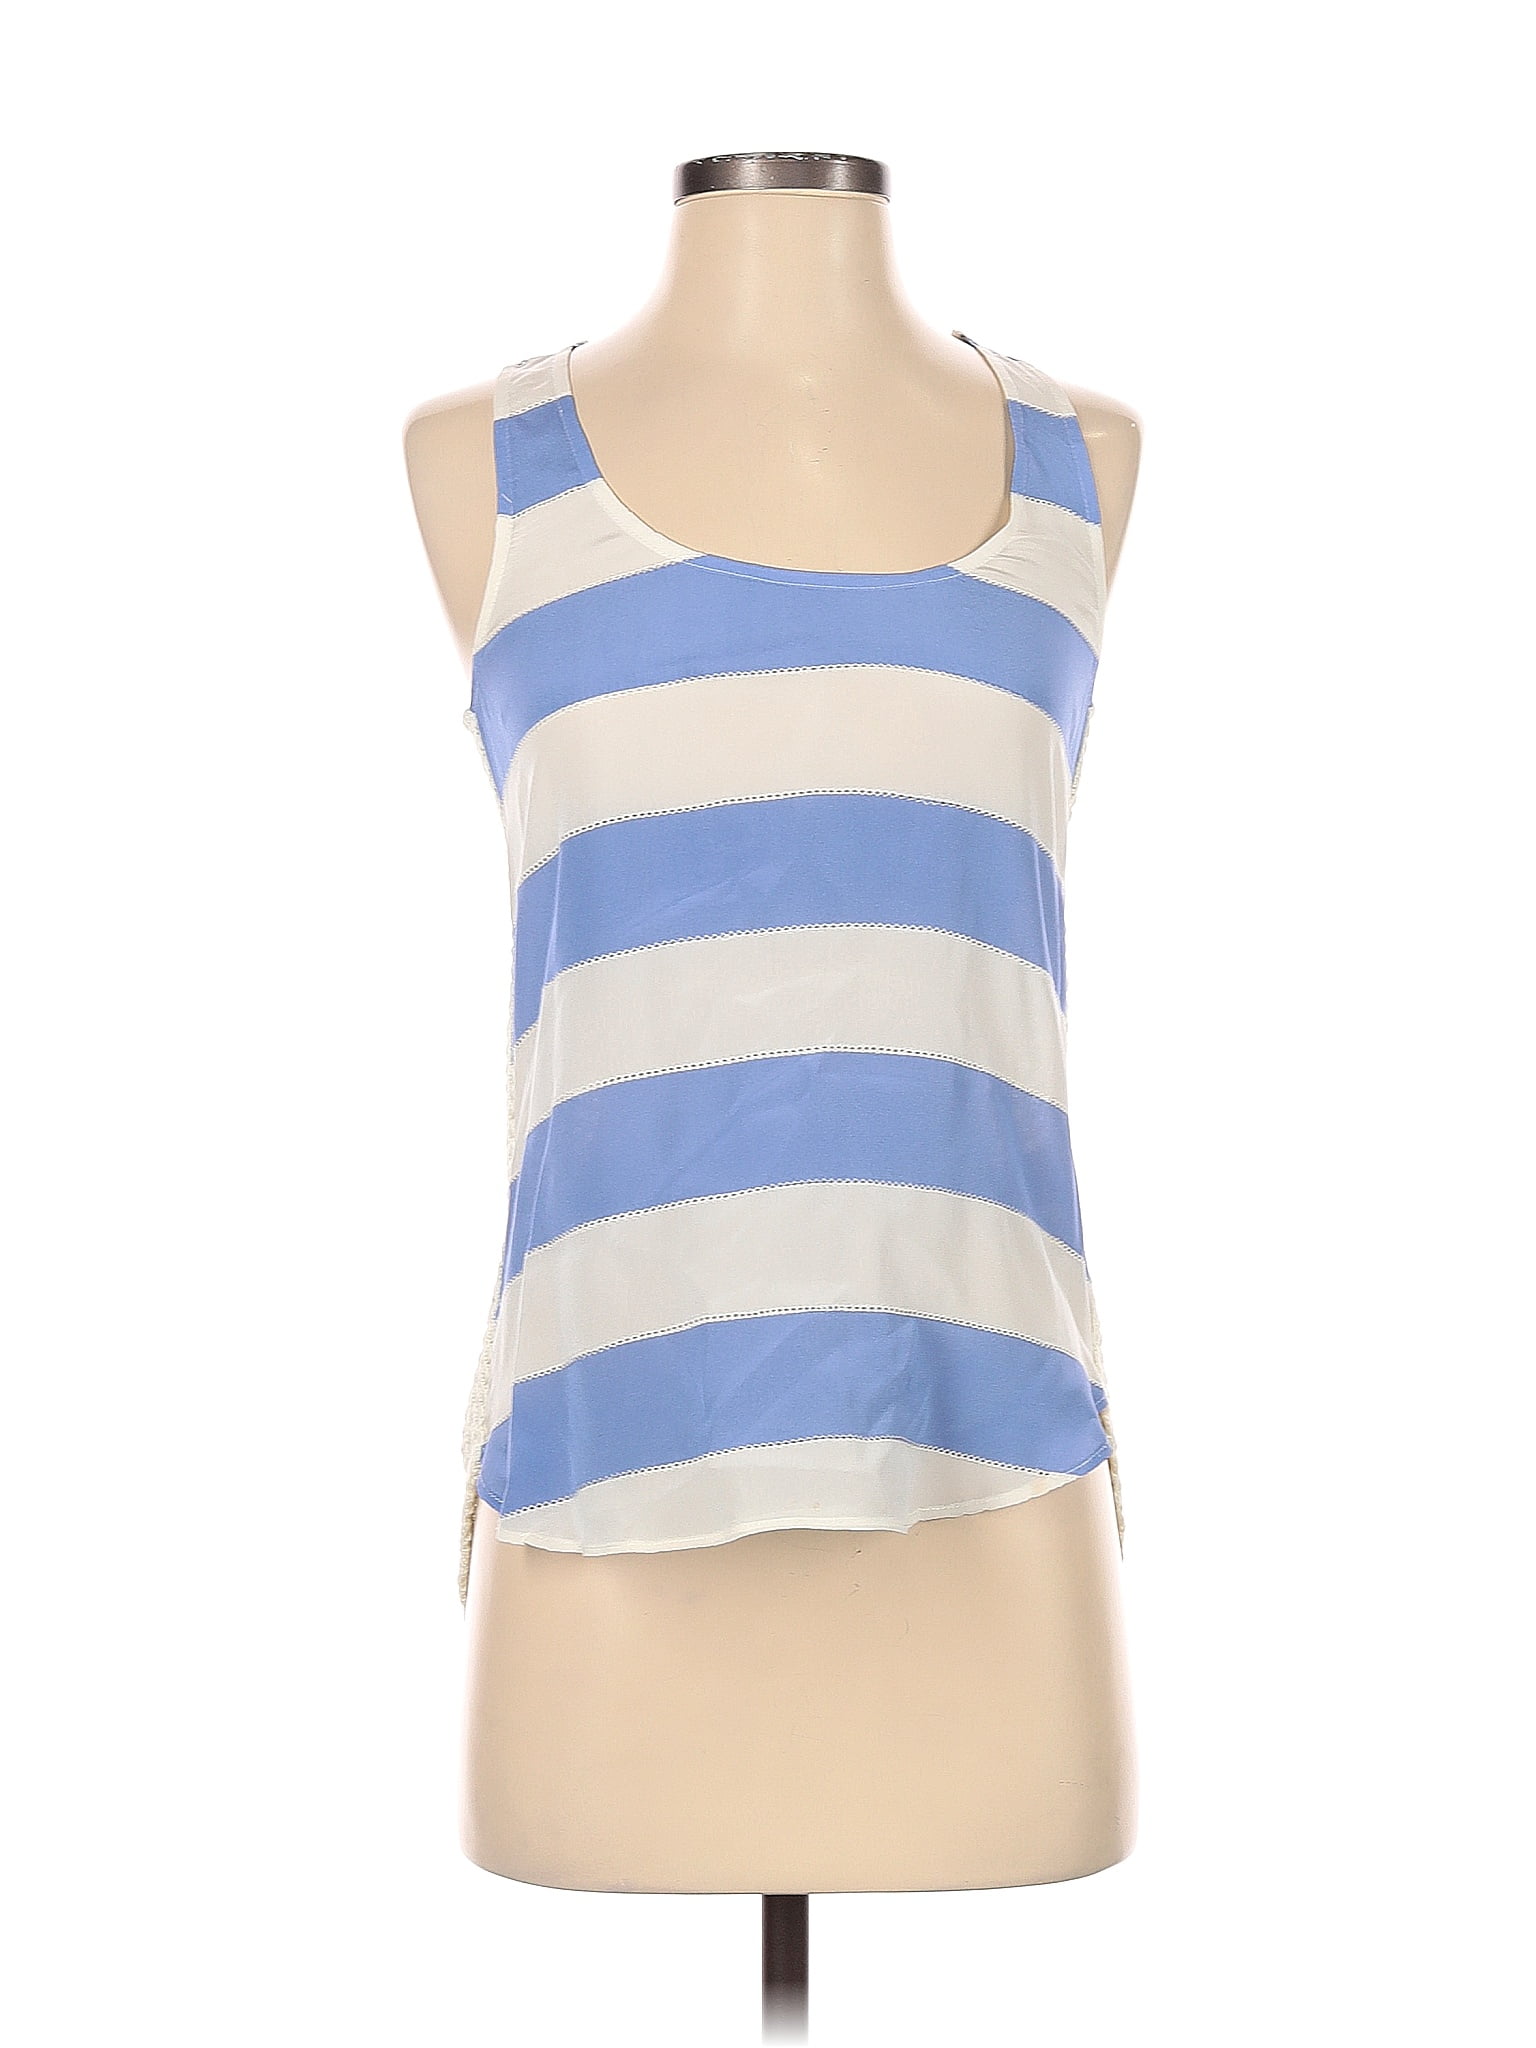 Ella Moss Color Block Stripes Blue Sleeveless Top Size XS - 79% off